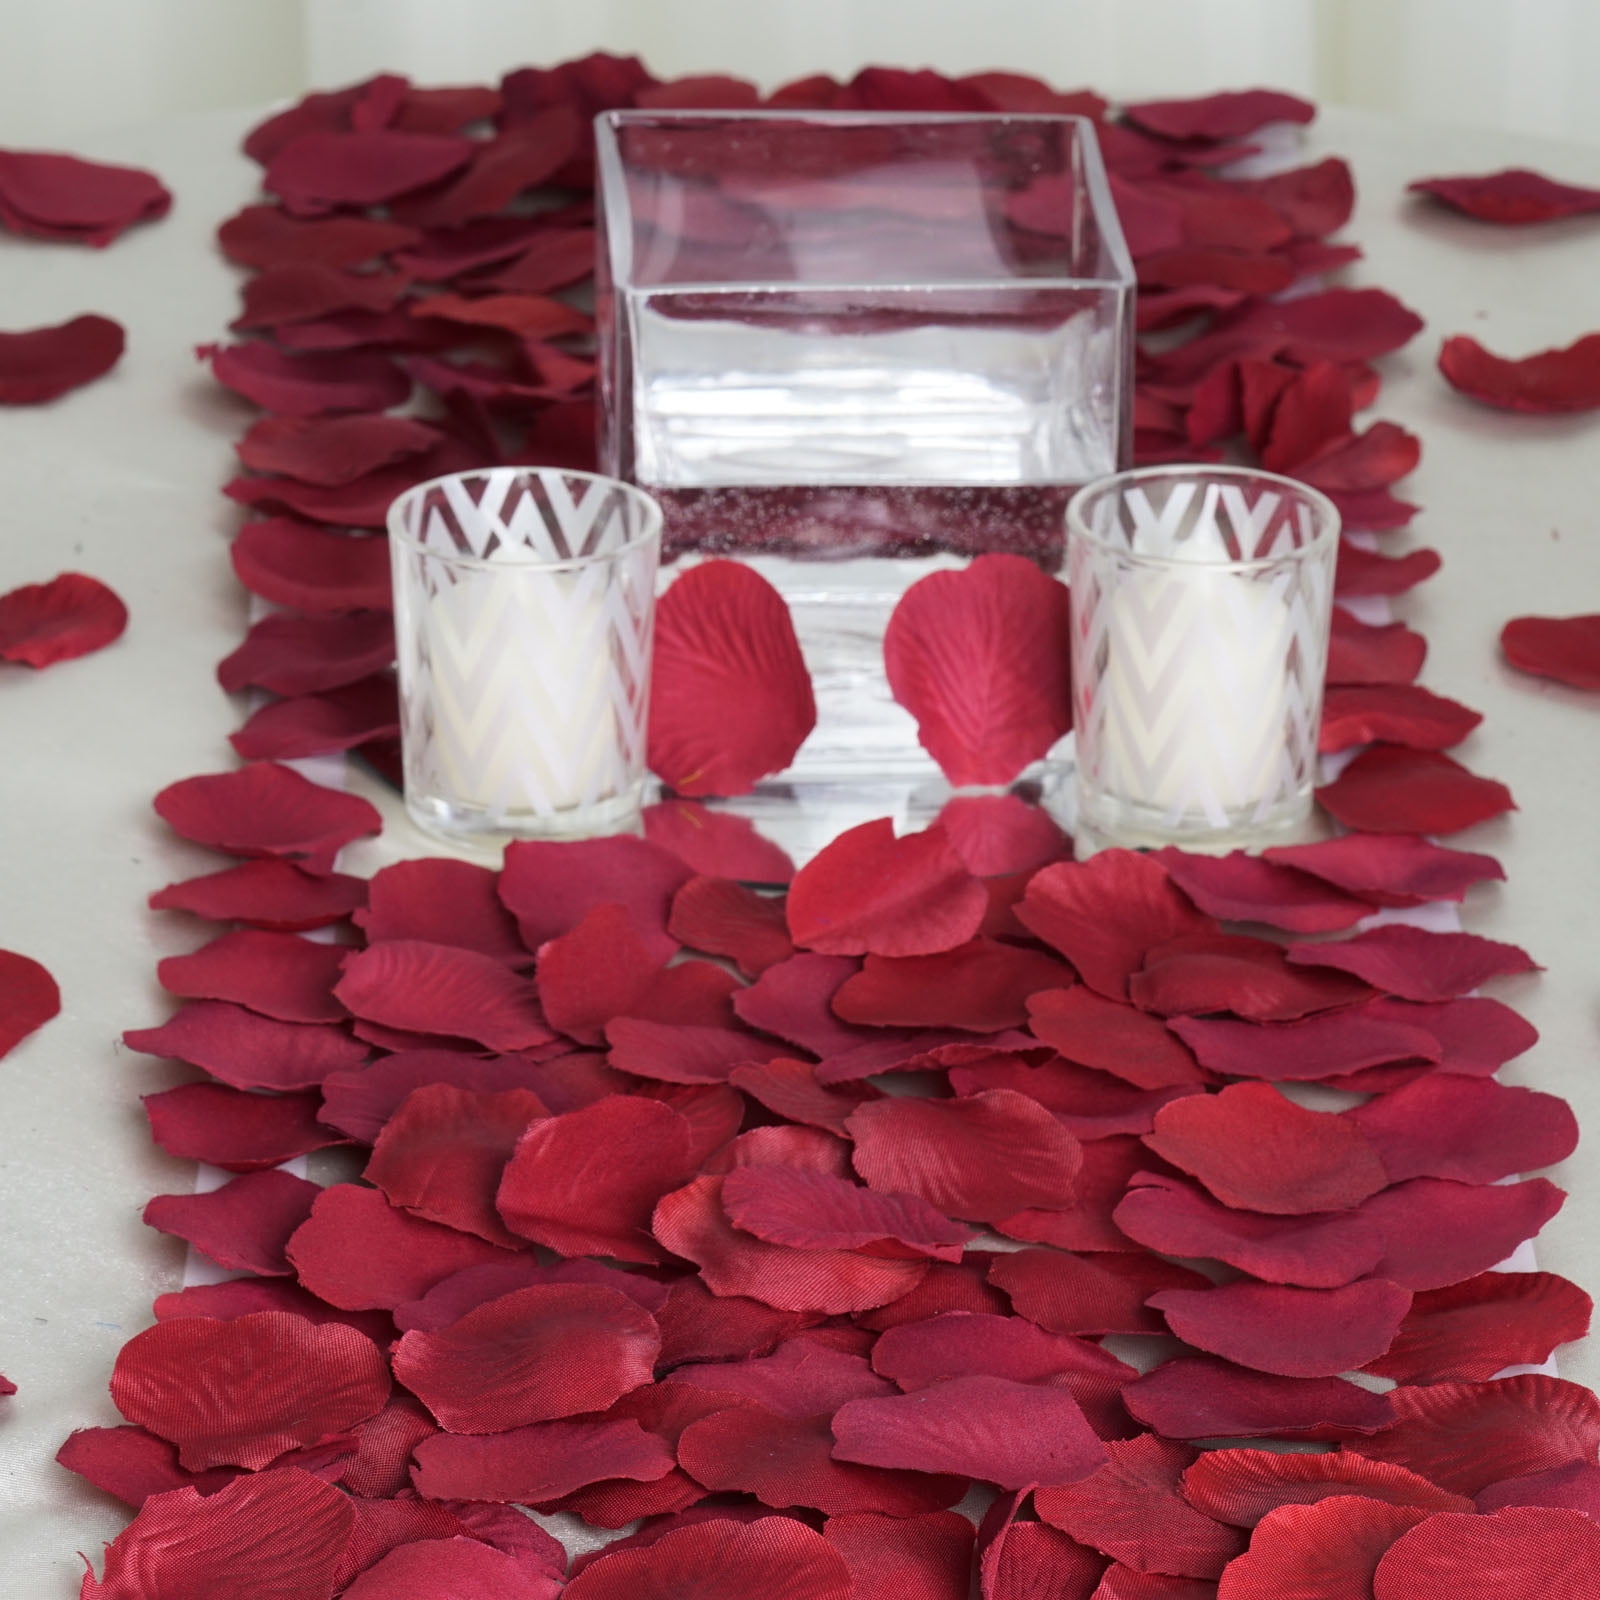 500PCs Party Supplies Table Petals Rose Flower Silk Wedding Decorations 